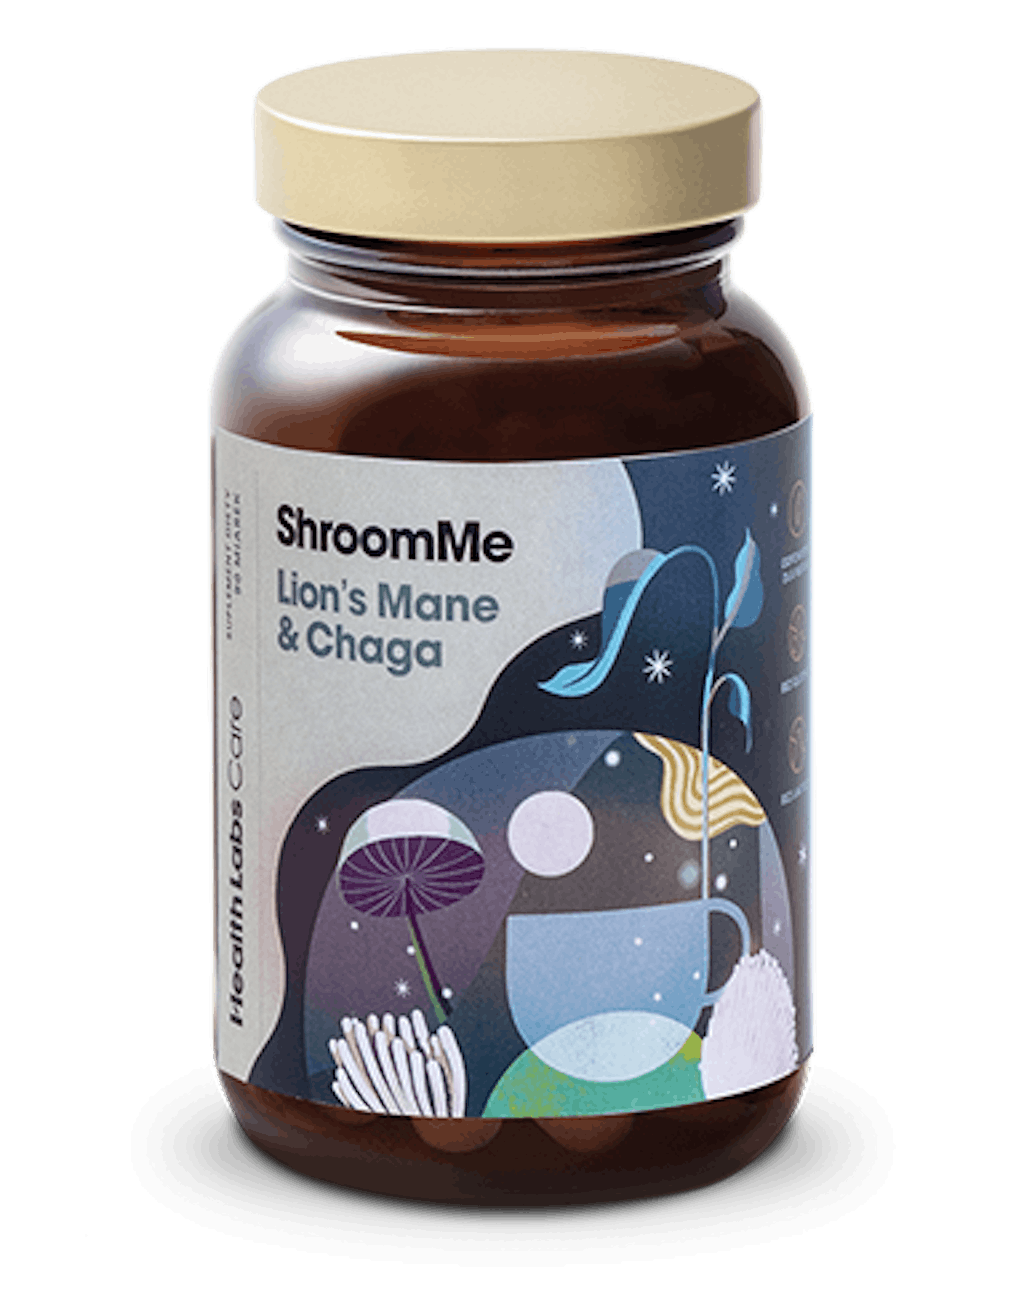 ShroomMe Lion’s Mane & Chaga